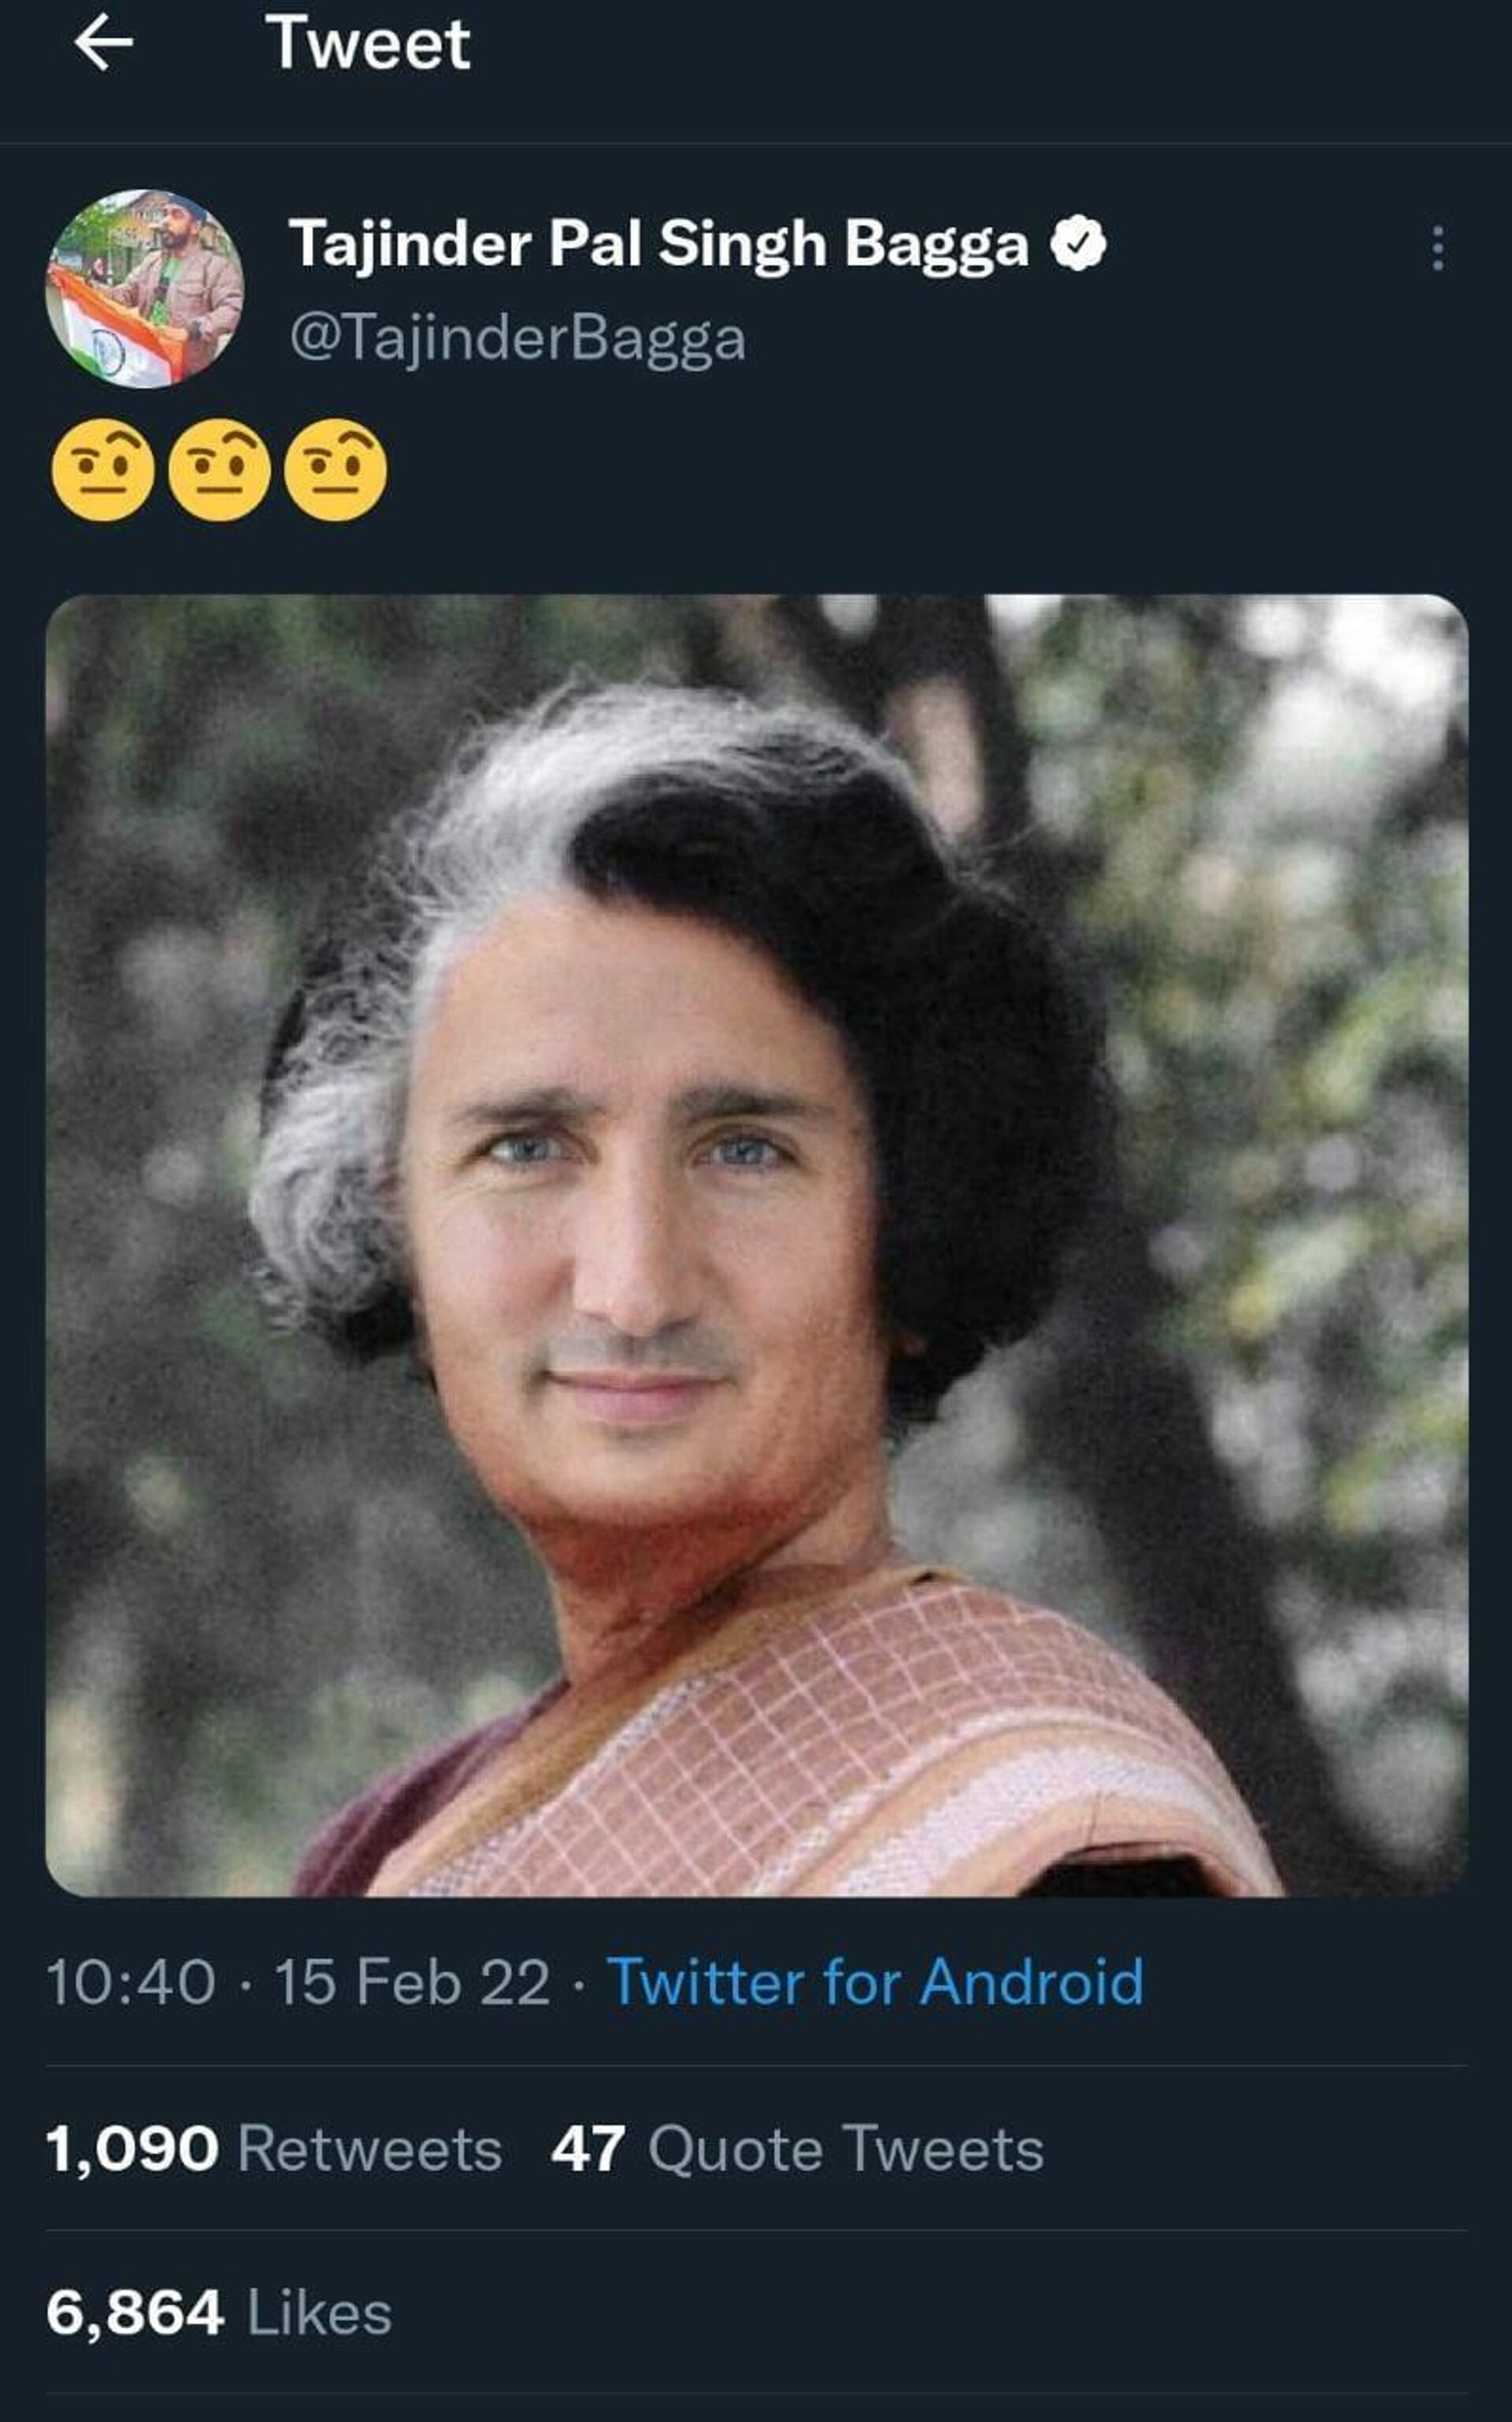 Indians Compare Canadian PM with India's Ex-Pm Indira Gandhi - Sputnik International, 1920, 15.02.2022